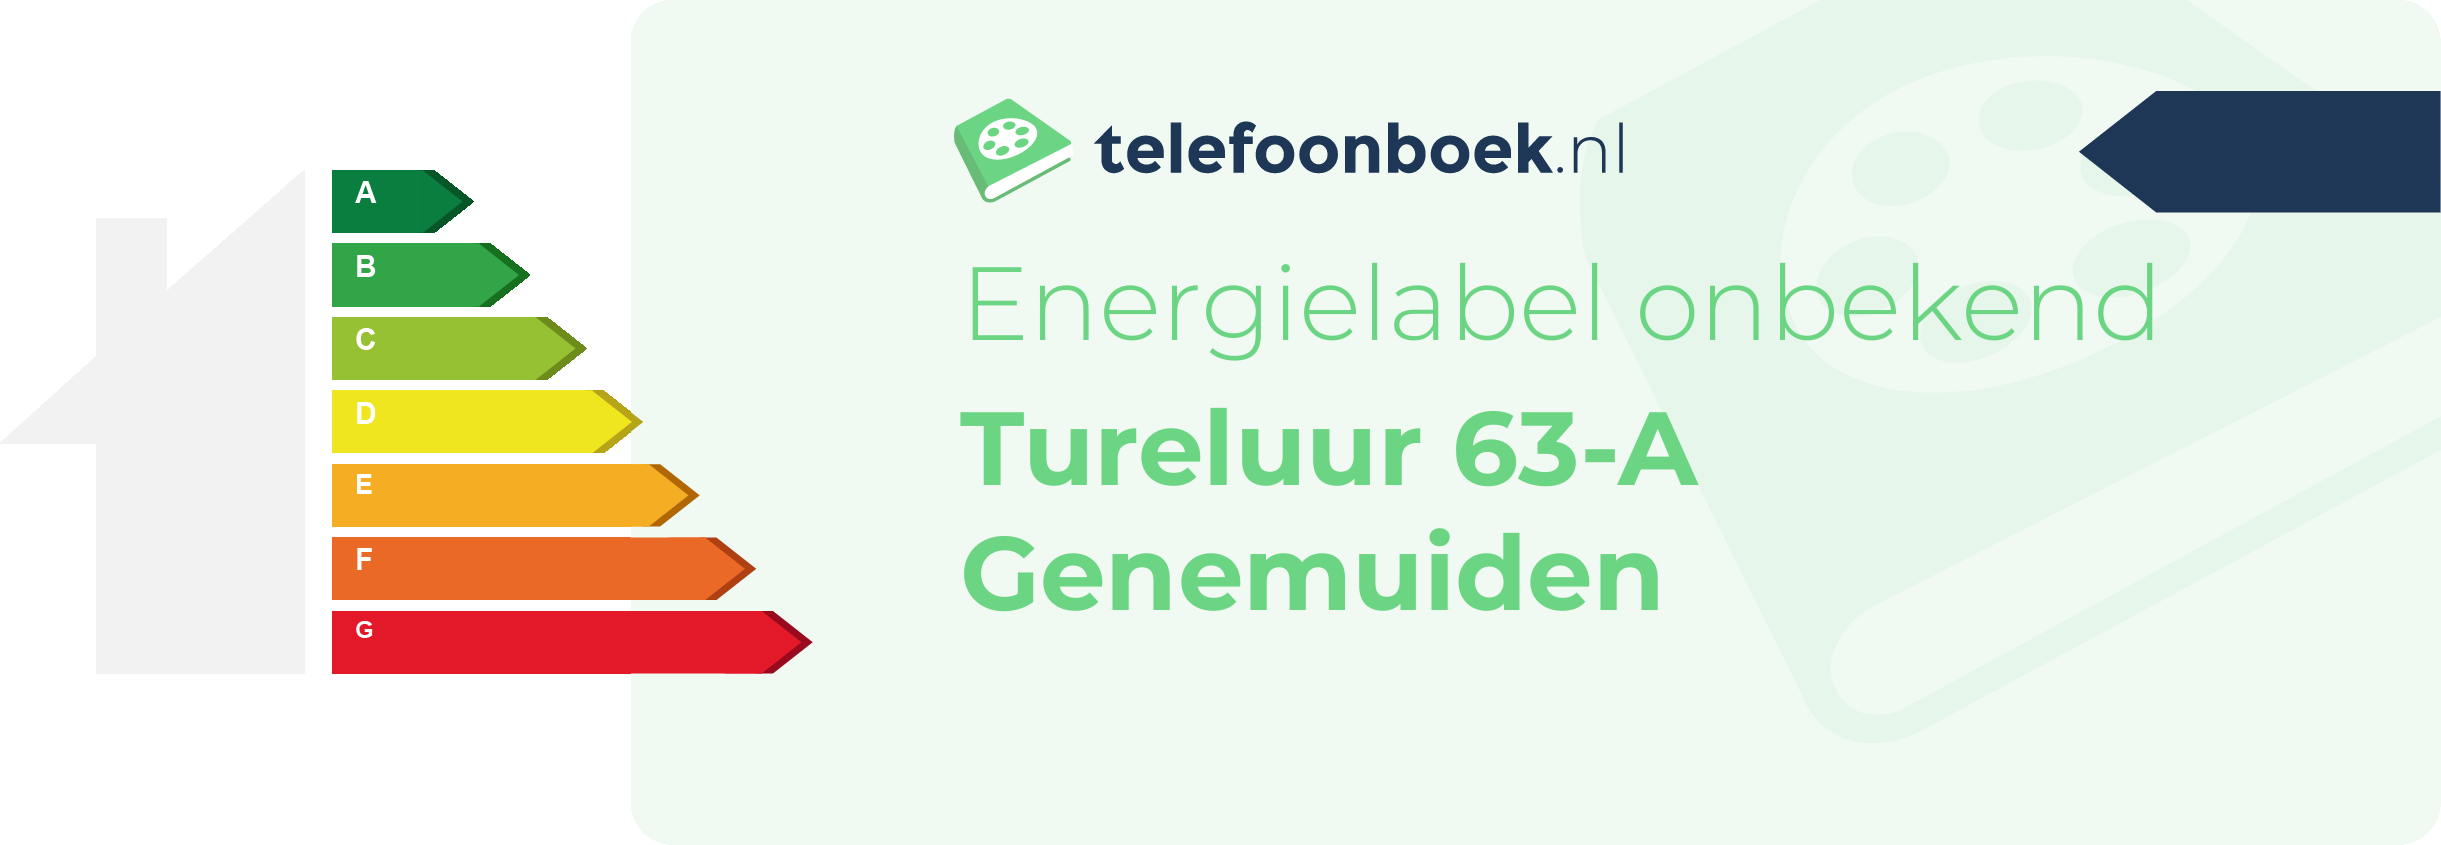 Energielabel Tureluur 63-A Genemuiden